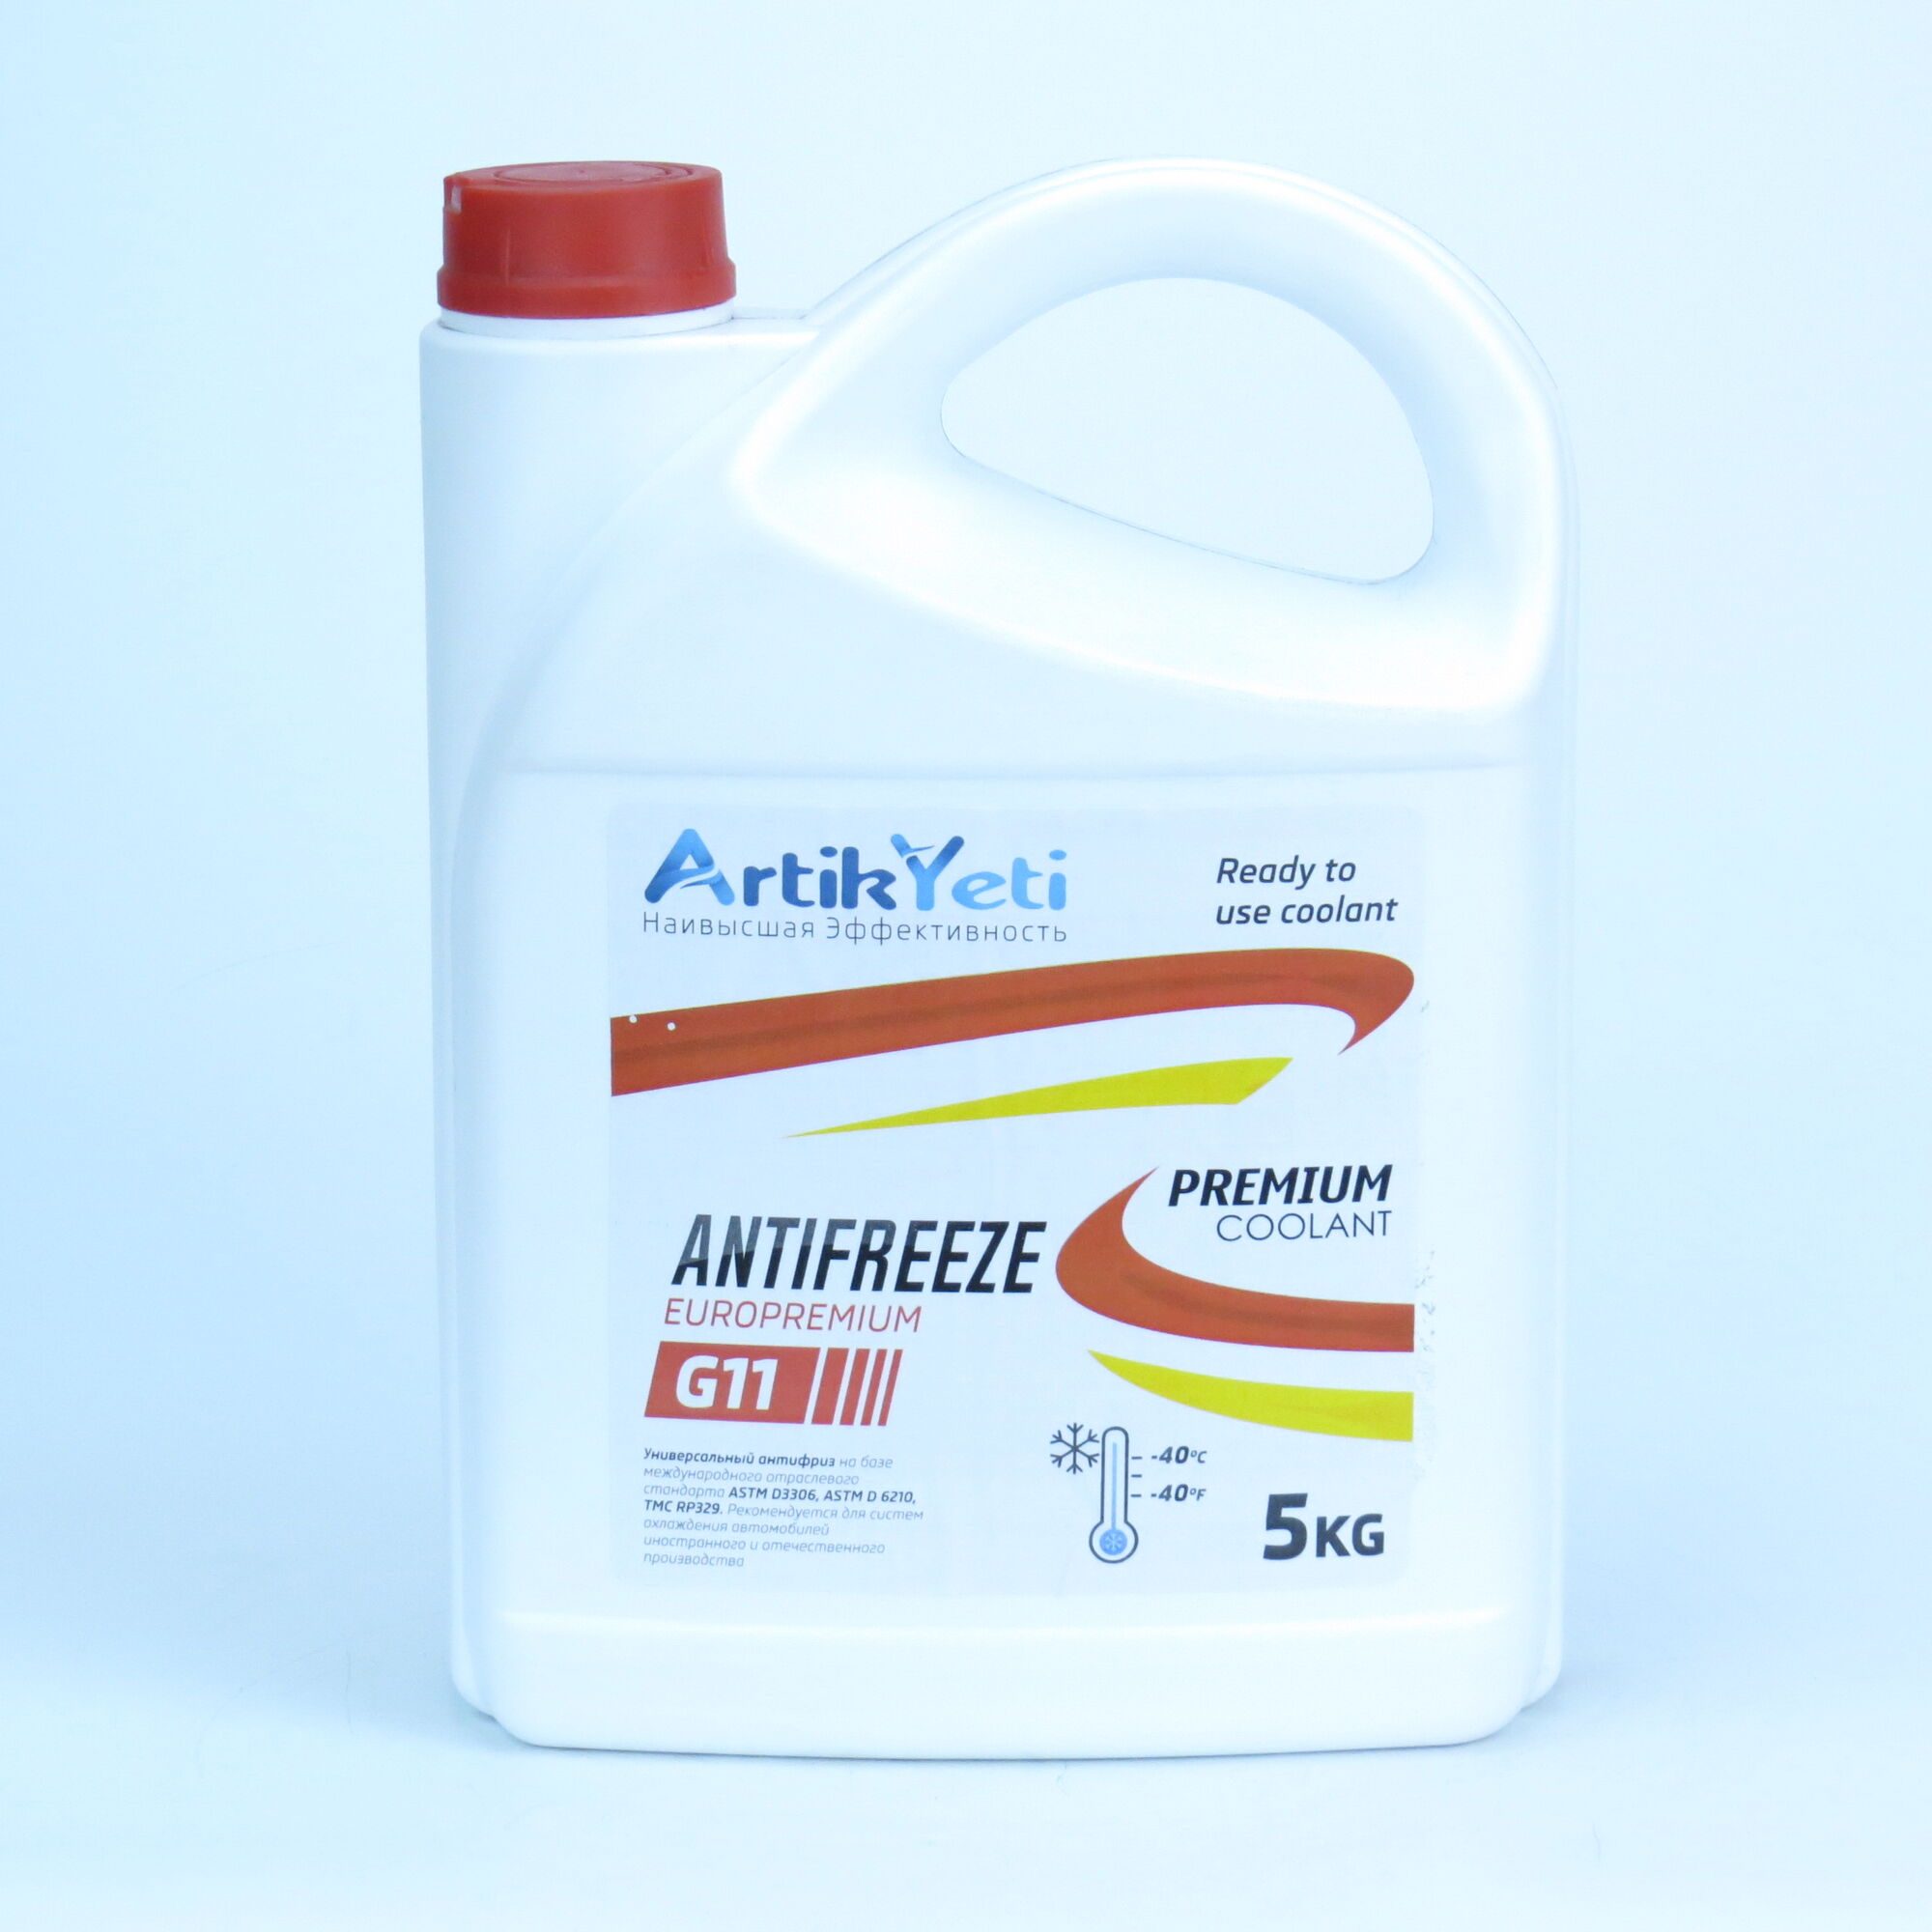 ArtikYeti Antifreeze Euro Premium G11 красный 5кг